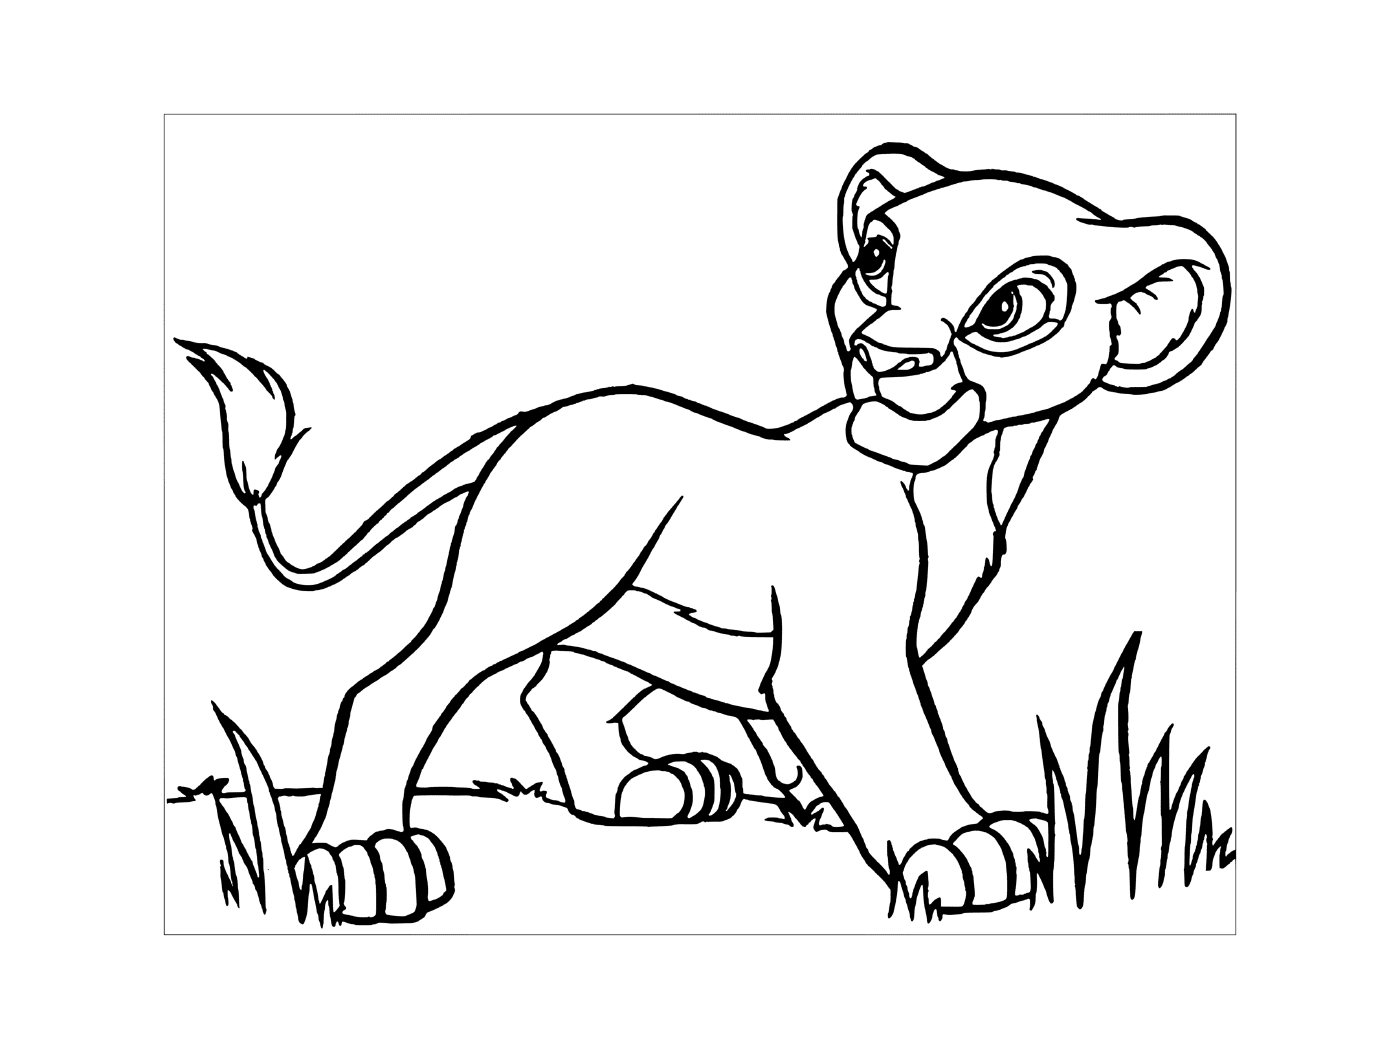  Simba in Re Leone 3 